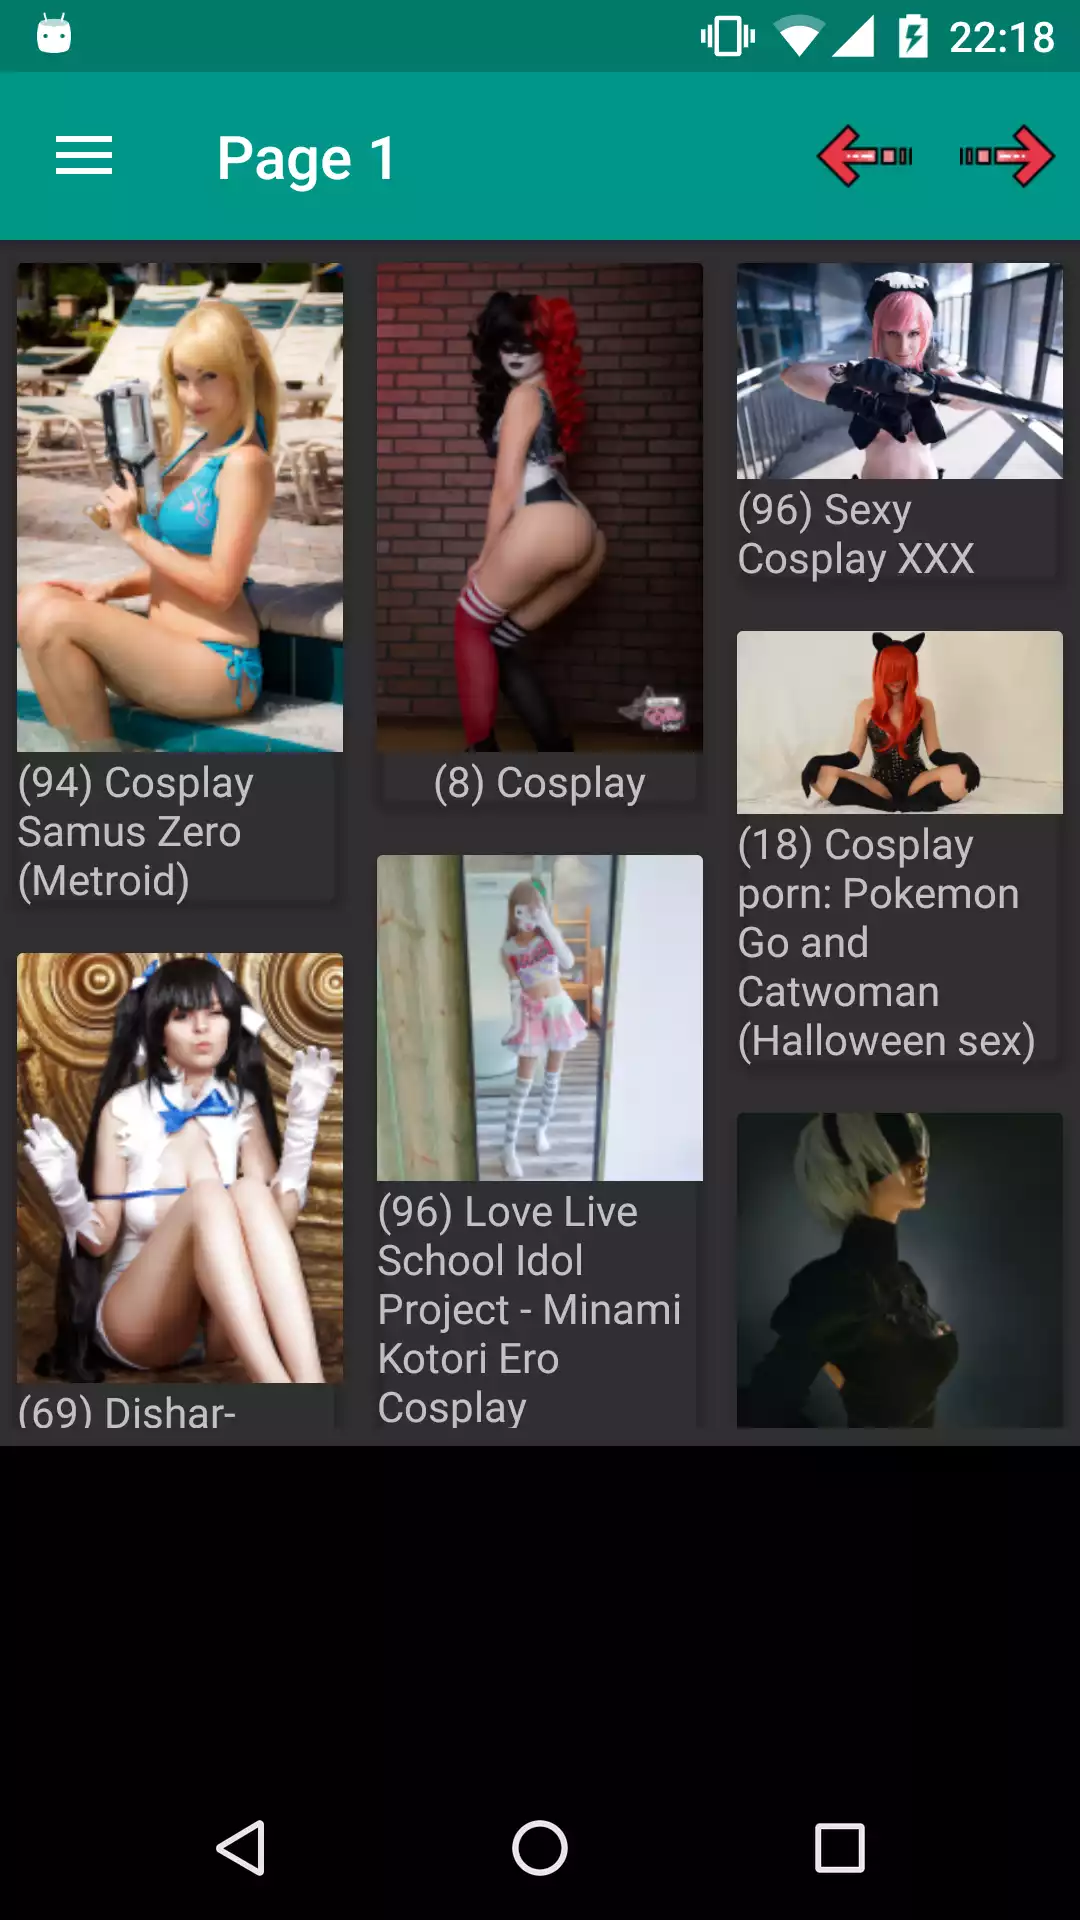 Cosplay Galleries 2 rated,hentai,android,photos,amateurs,gomez,pornstars,henati,sexy,porn,offline,apk,picture,best,shrinking,app,dreams,anime,wallpaper,esperanza,cosplay,galleries,hot,live